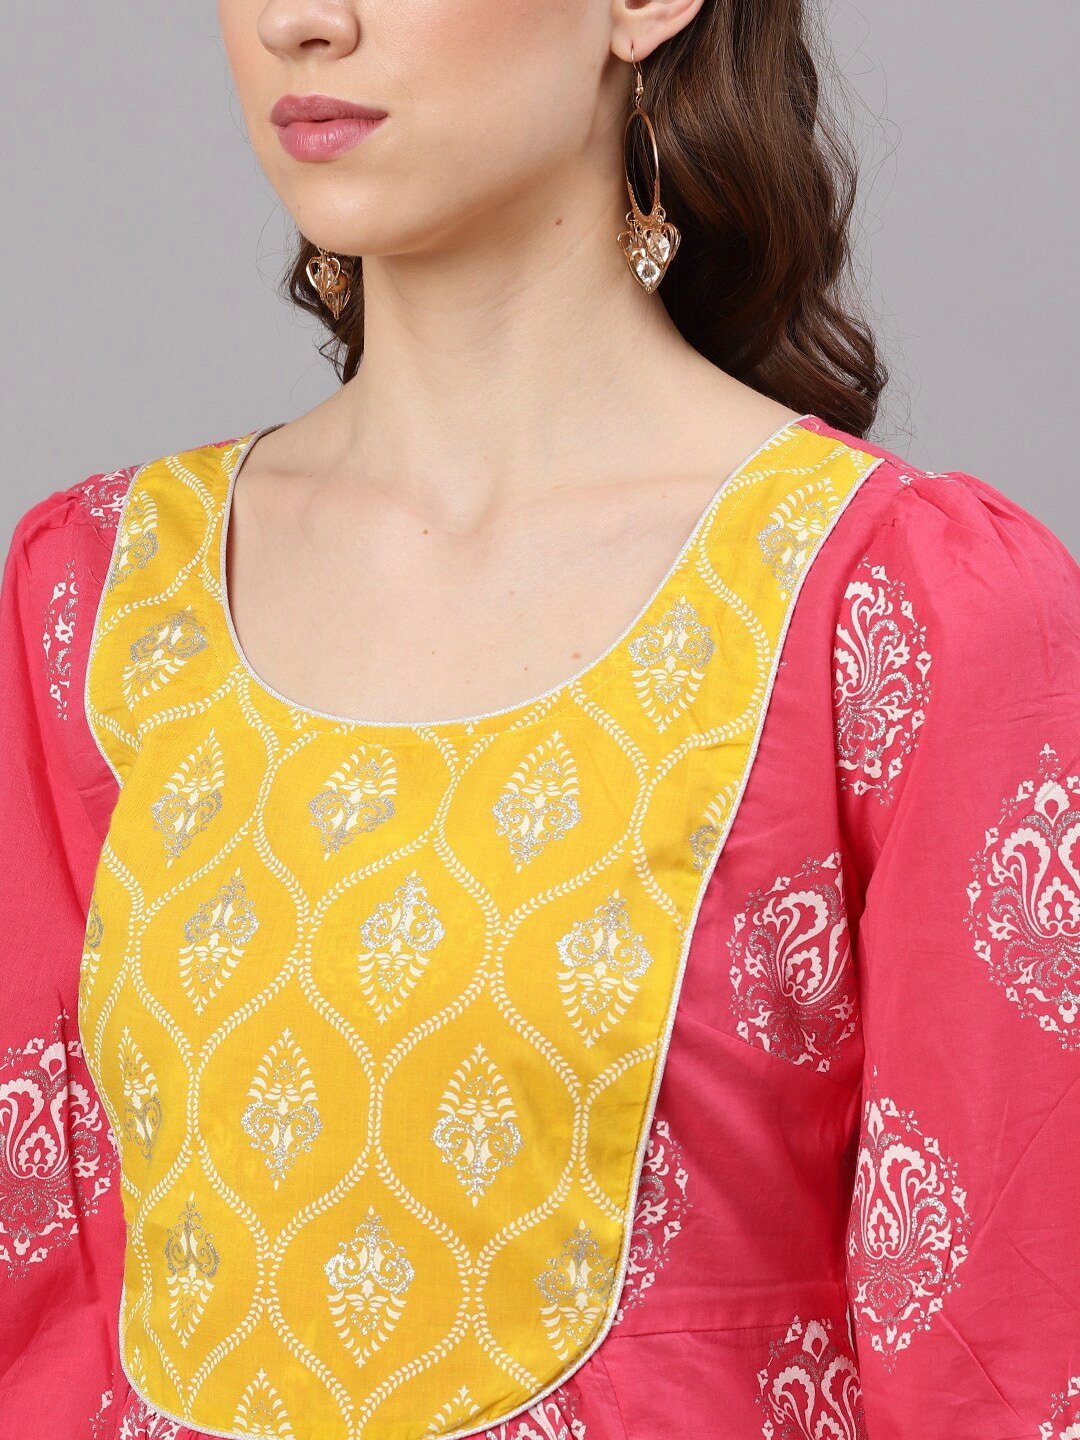 Women's  Pink & Yellow Yoke Design Anarkali Kurta - AKS